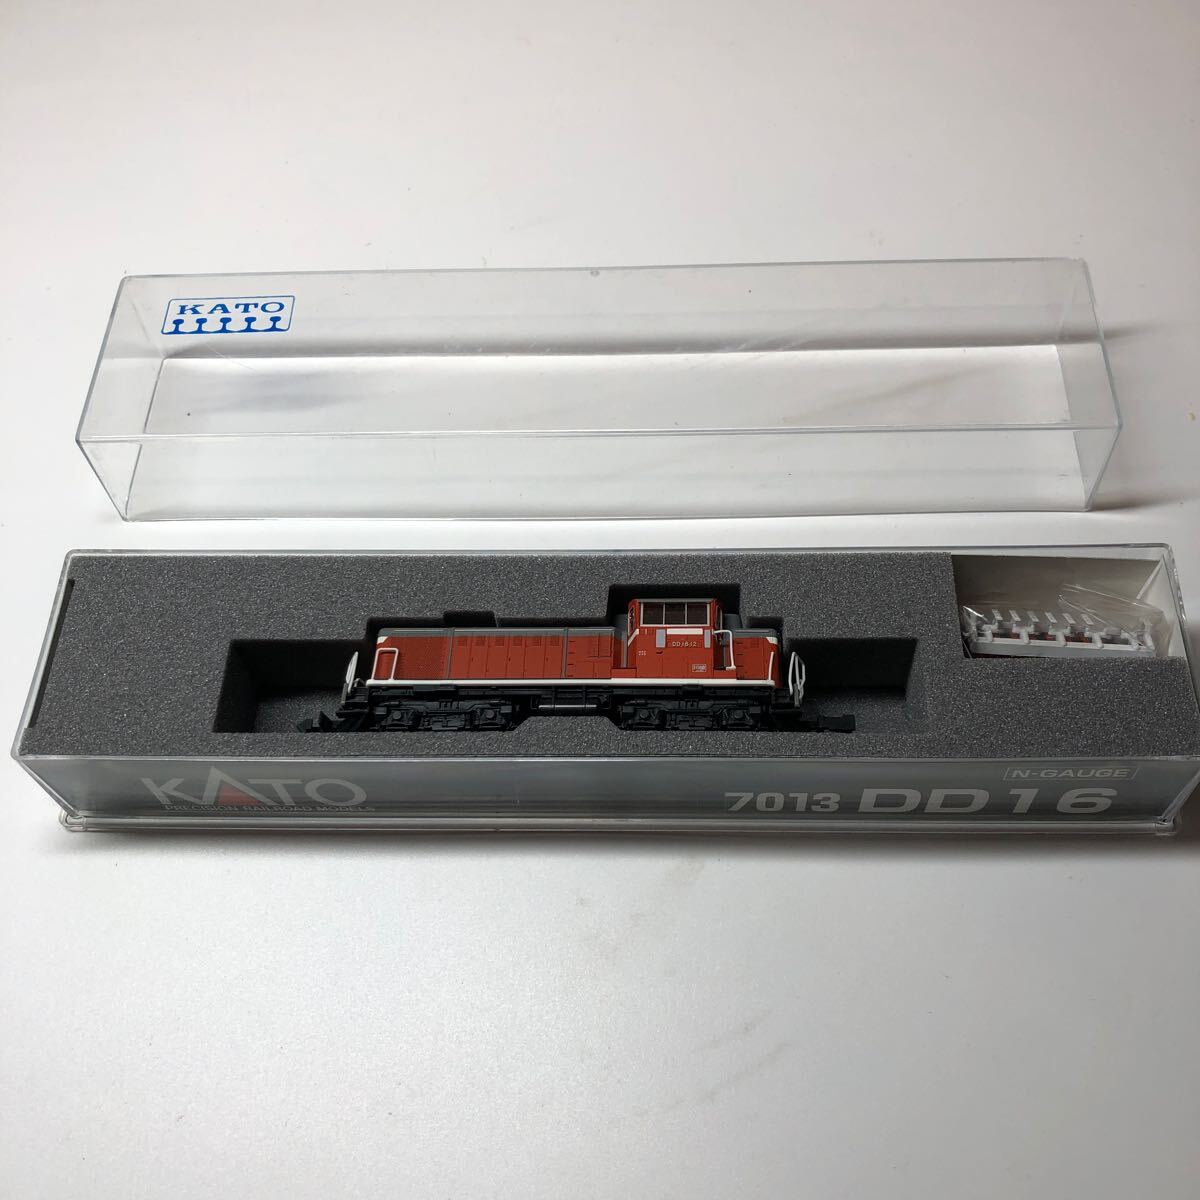 KATO 7013 DD16 Nゲージ ディーゼル機関車 鉄道模型 カトー の画像1